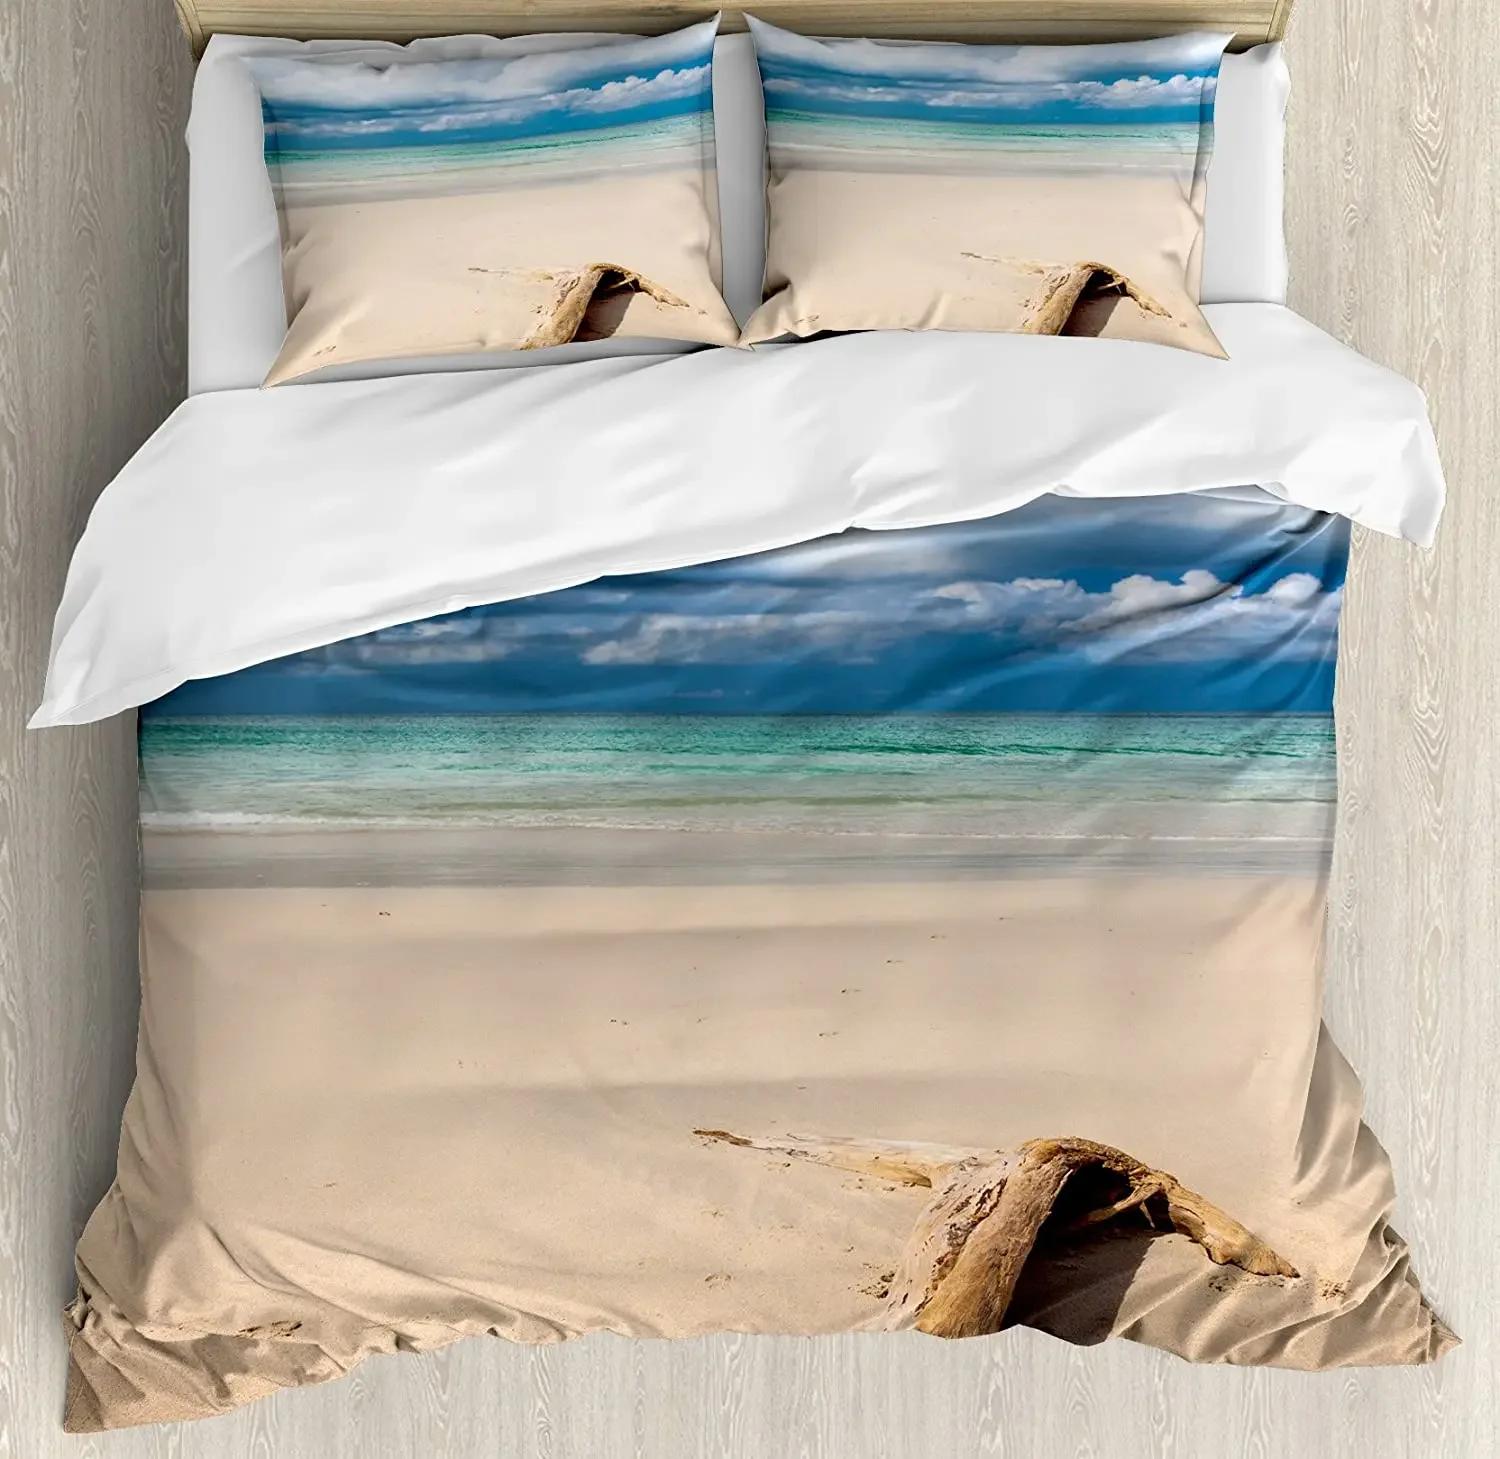 Driftwood Decor Bedding Set Comforter Duvet Cover Pillow Shams Sea Theme Driftwood on the Sandy Bea Bedding Cover Do